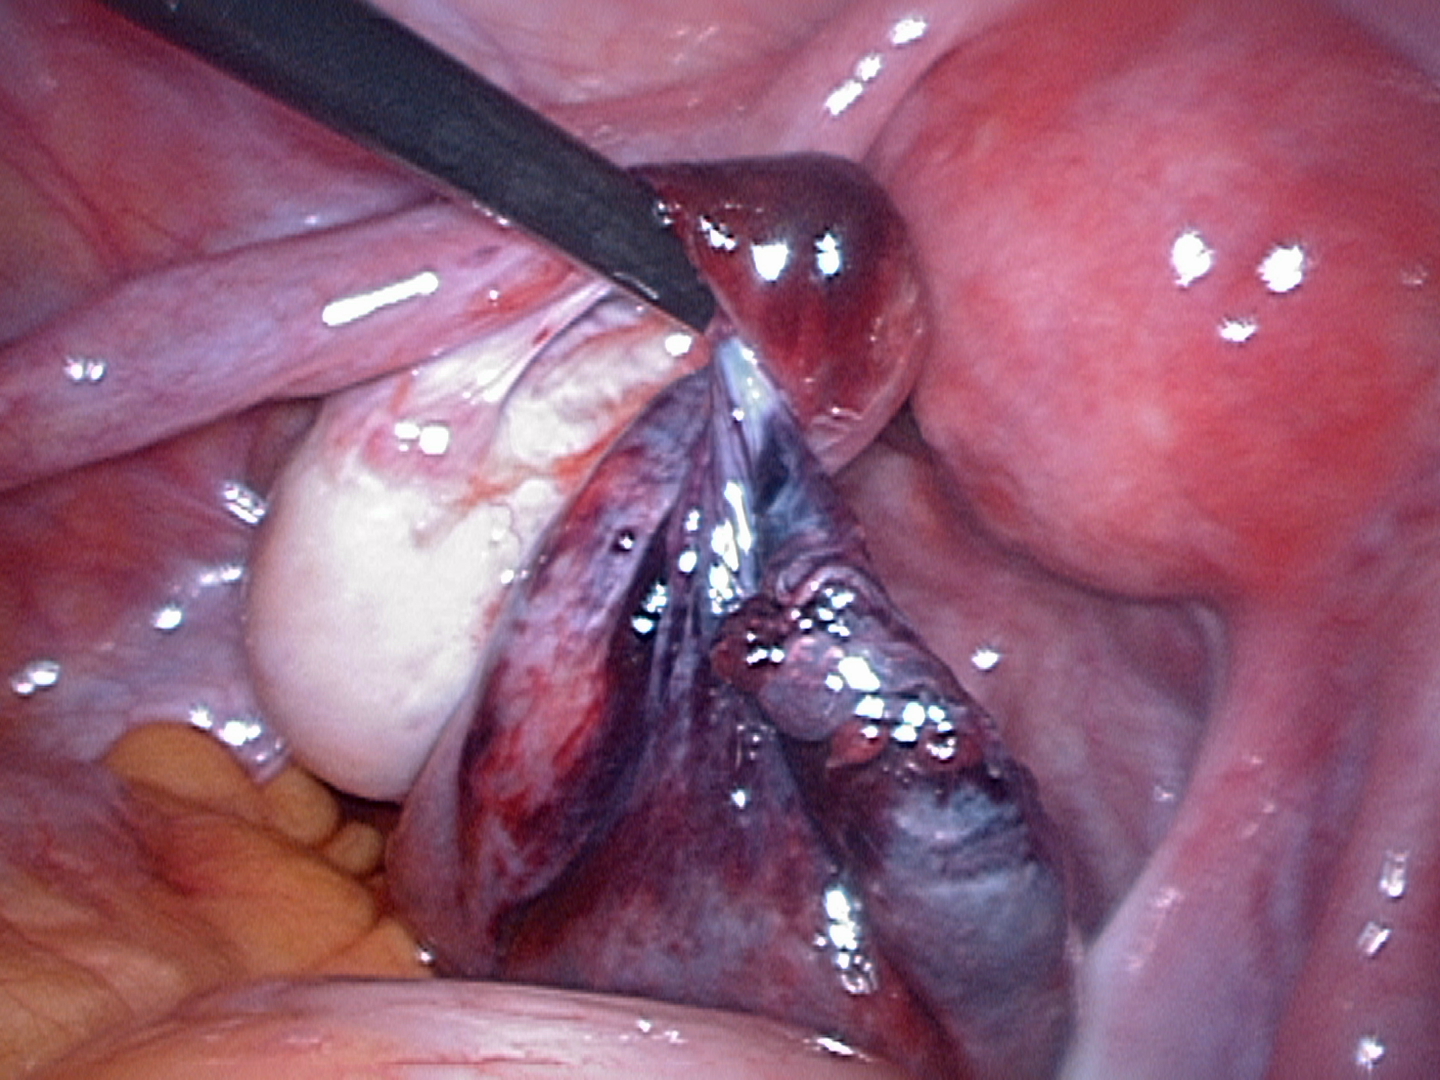 Twisted left fallopian tube normal left ovary